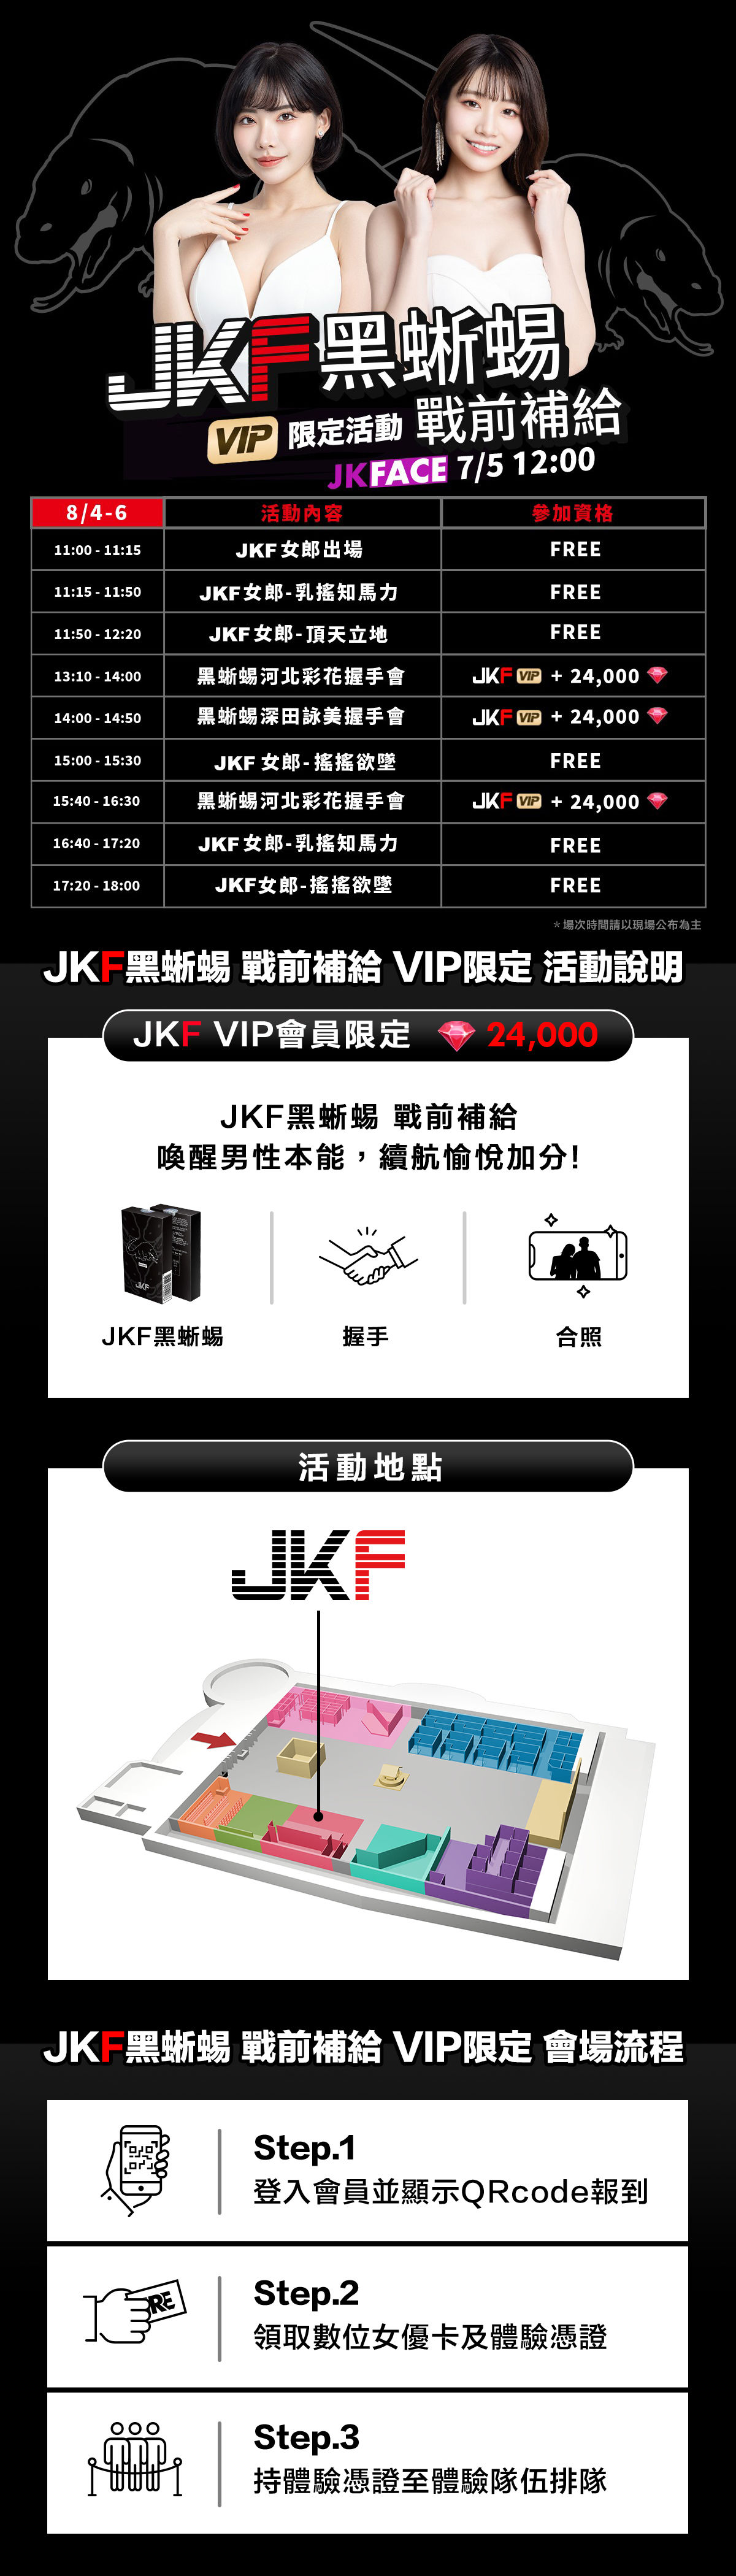 JKF黑蜥蜴 戰前補給 VIP限定活動 的詳細資訊圖片